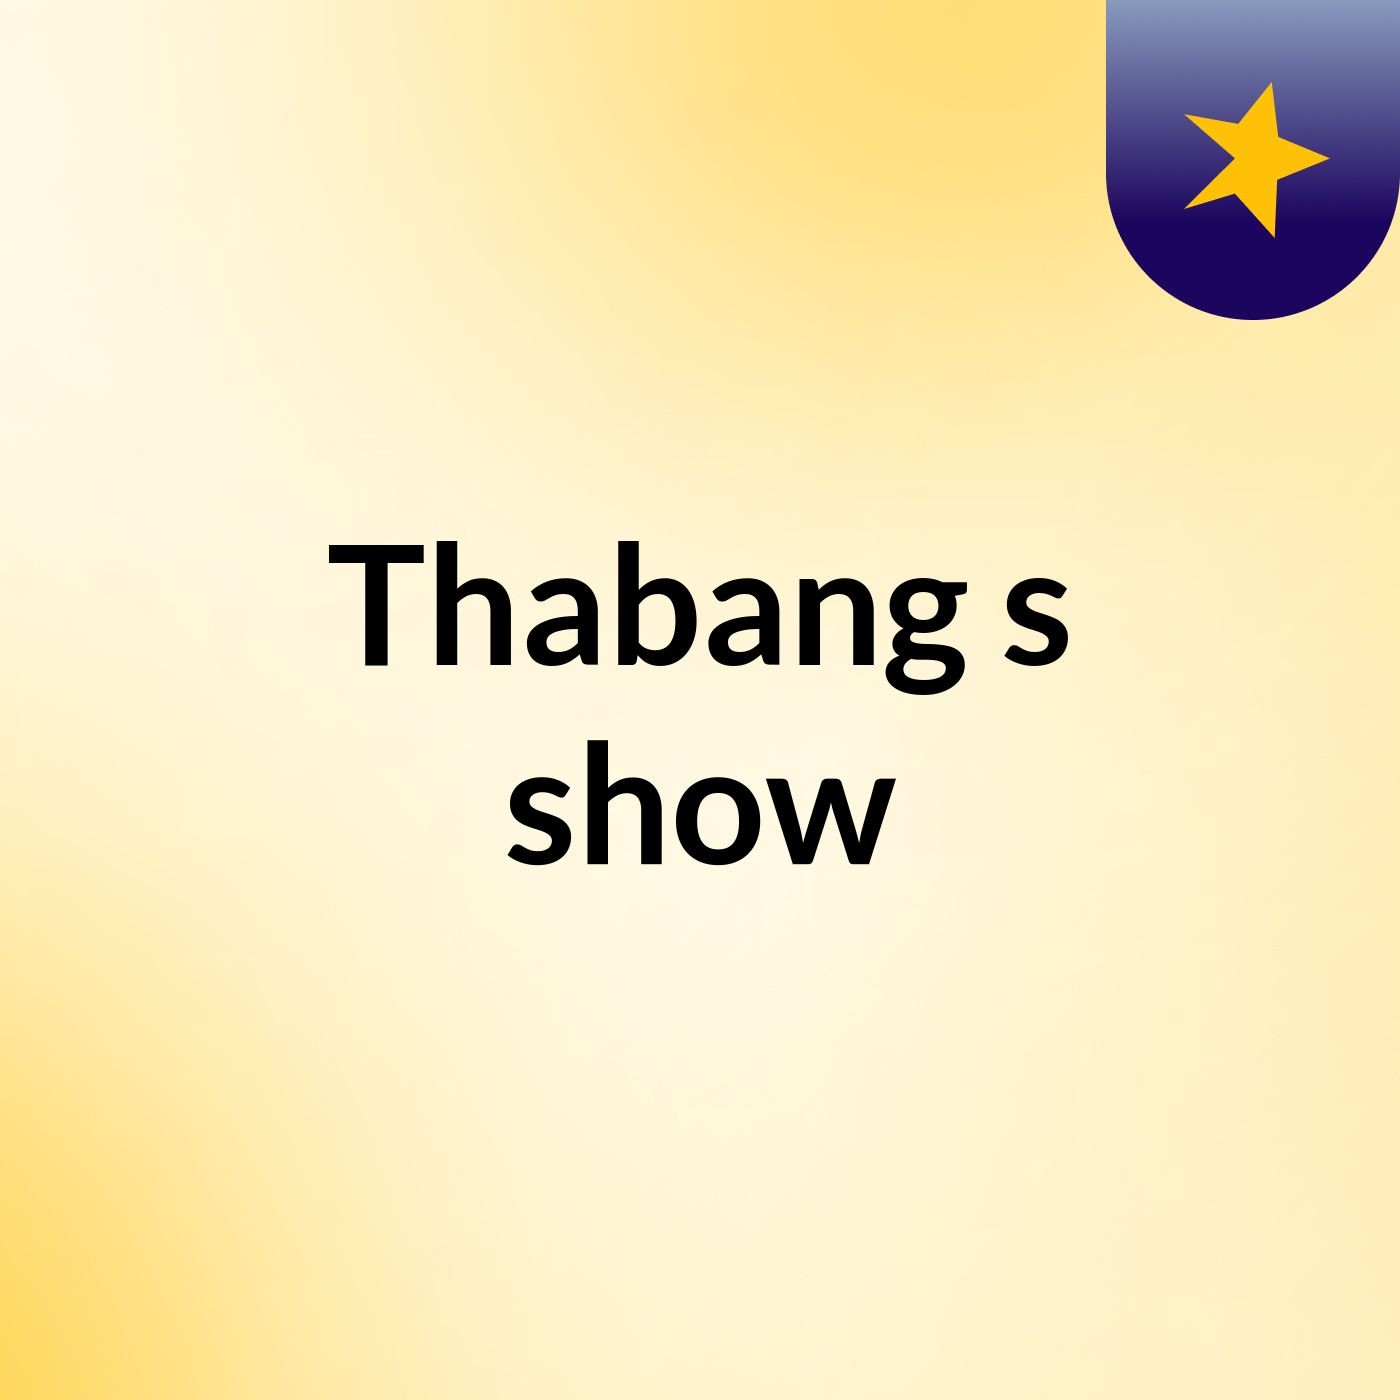 Thabang's show